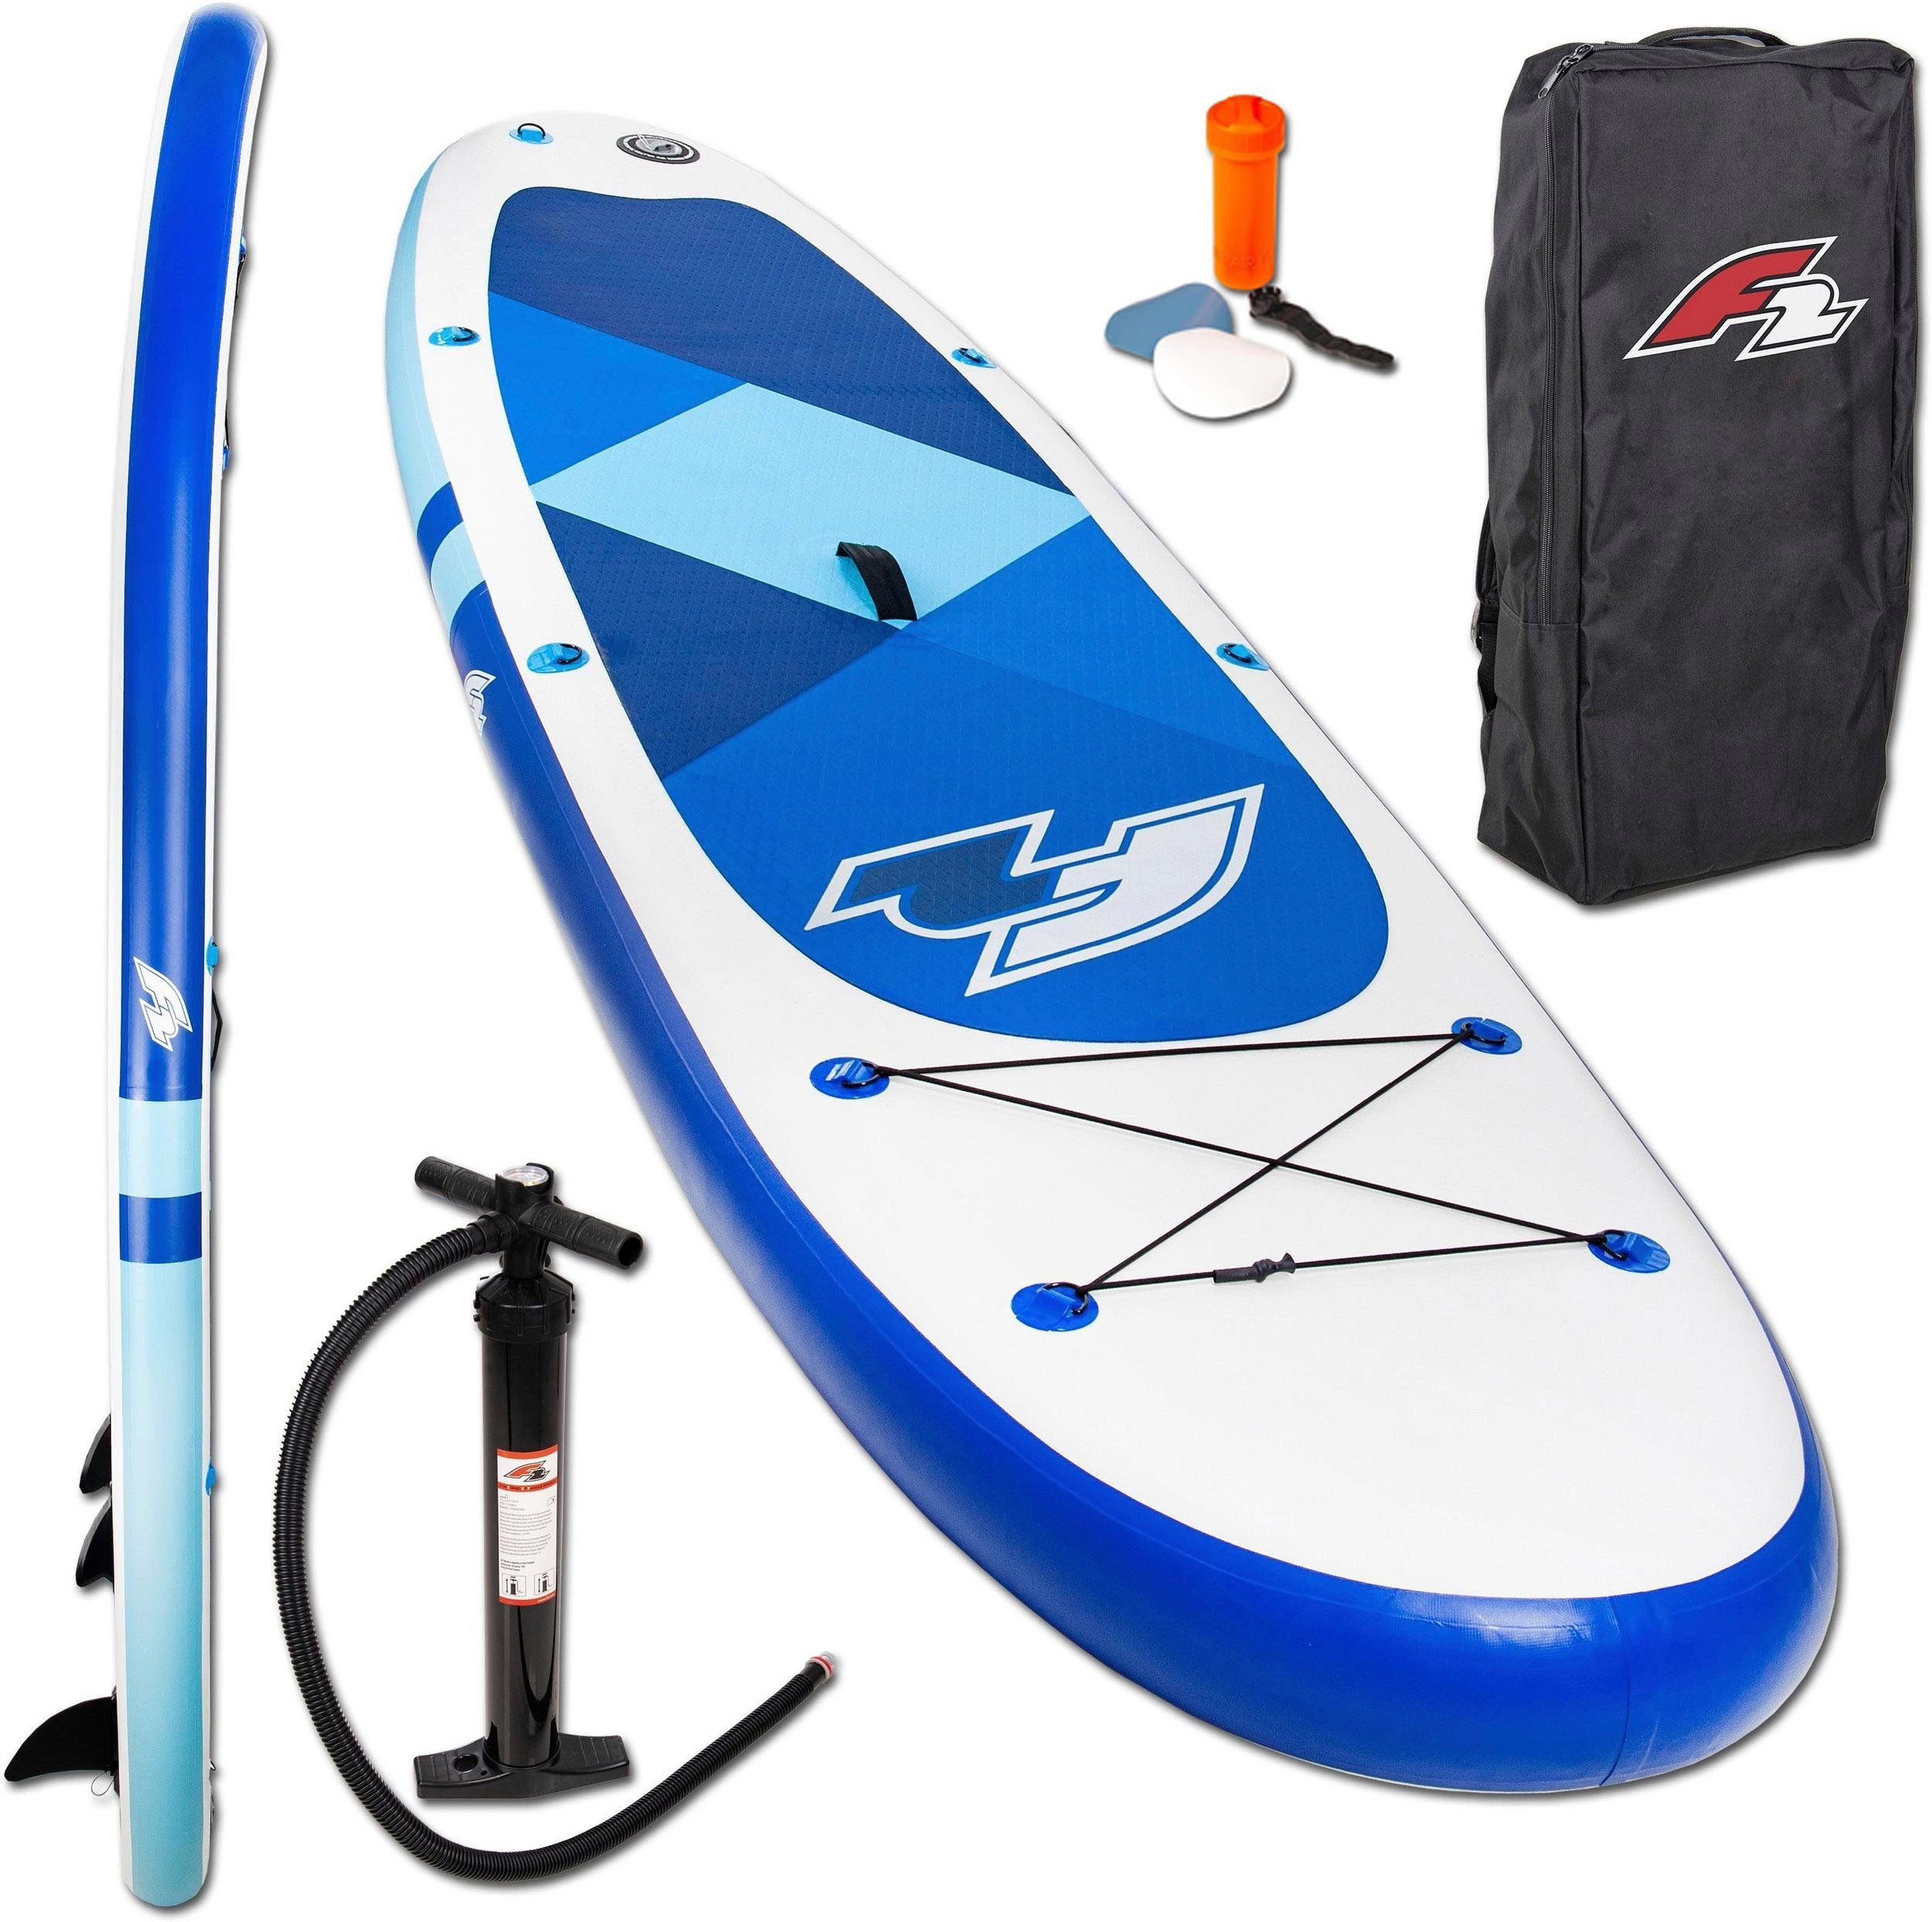 tlg) (Set, blue, Prime F2 3 F2 Inflatable SUP-Board